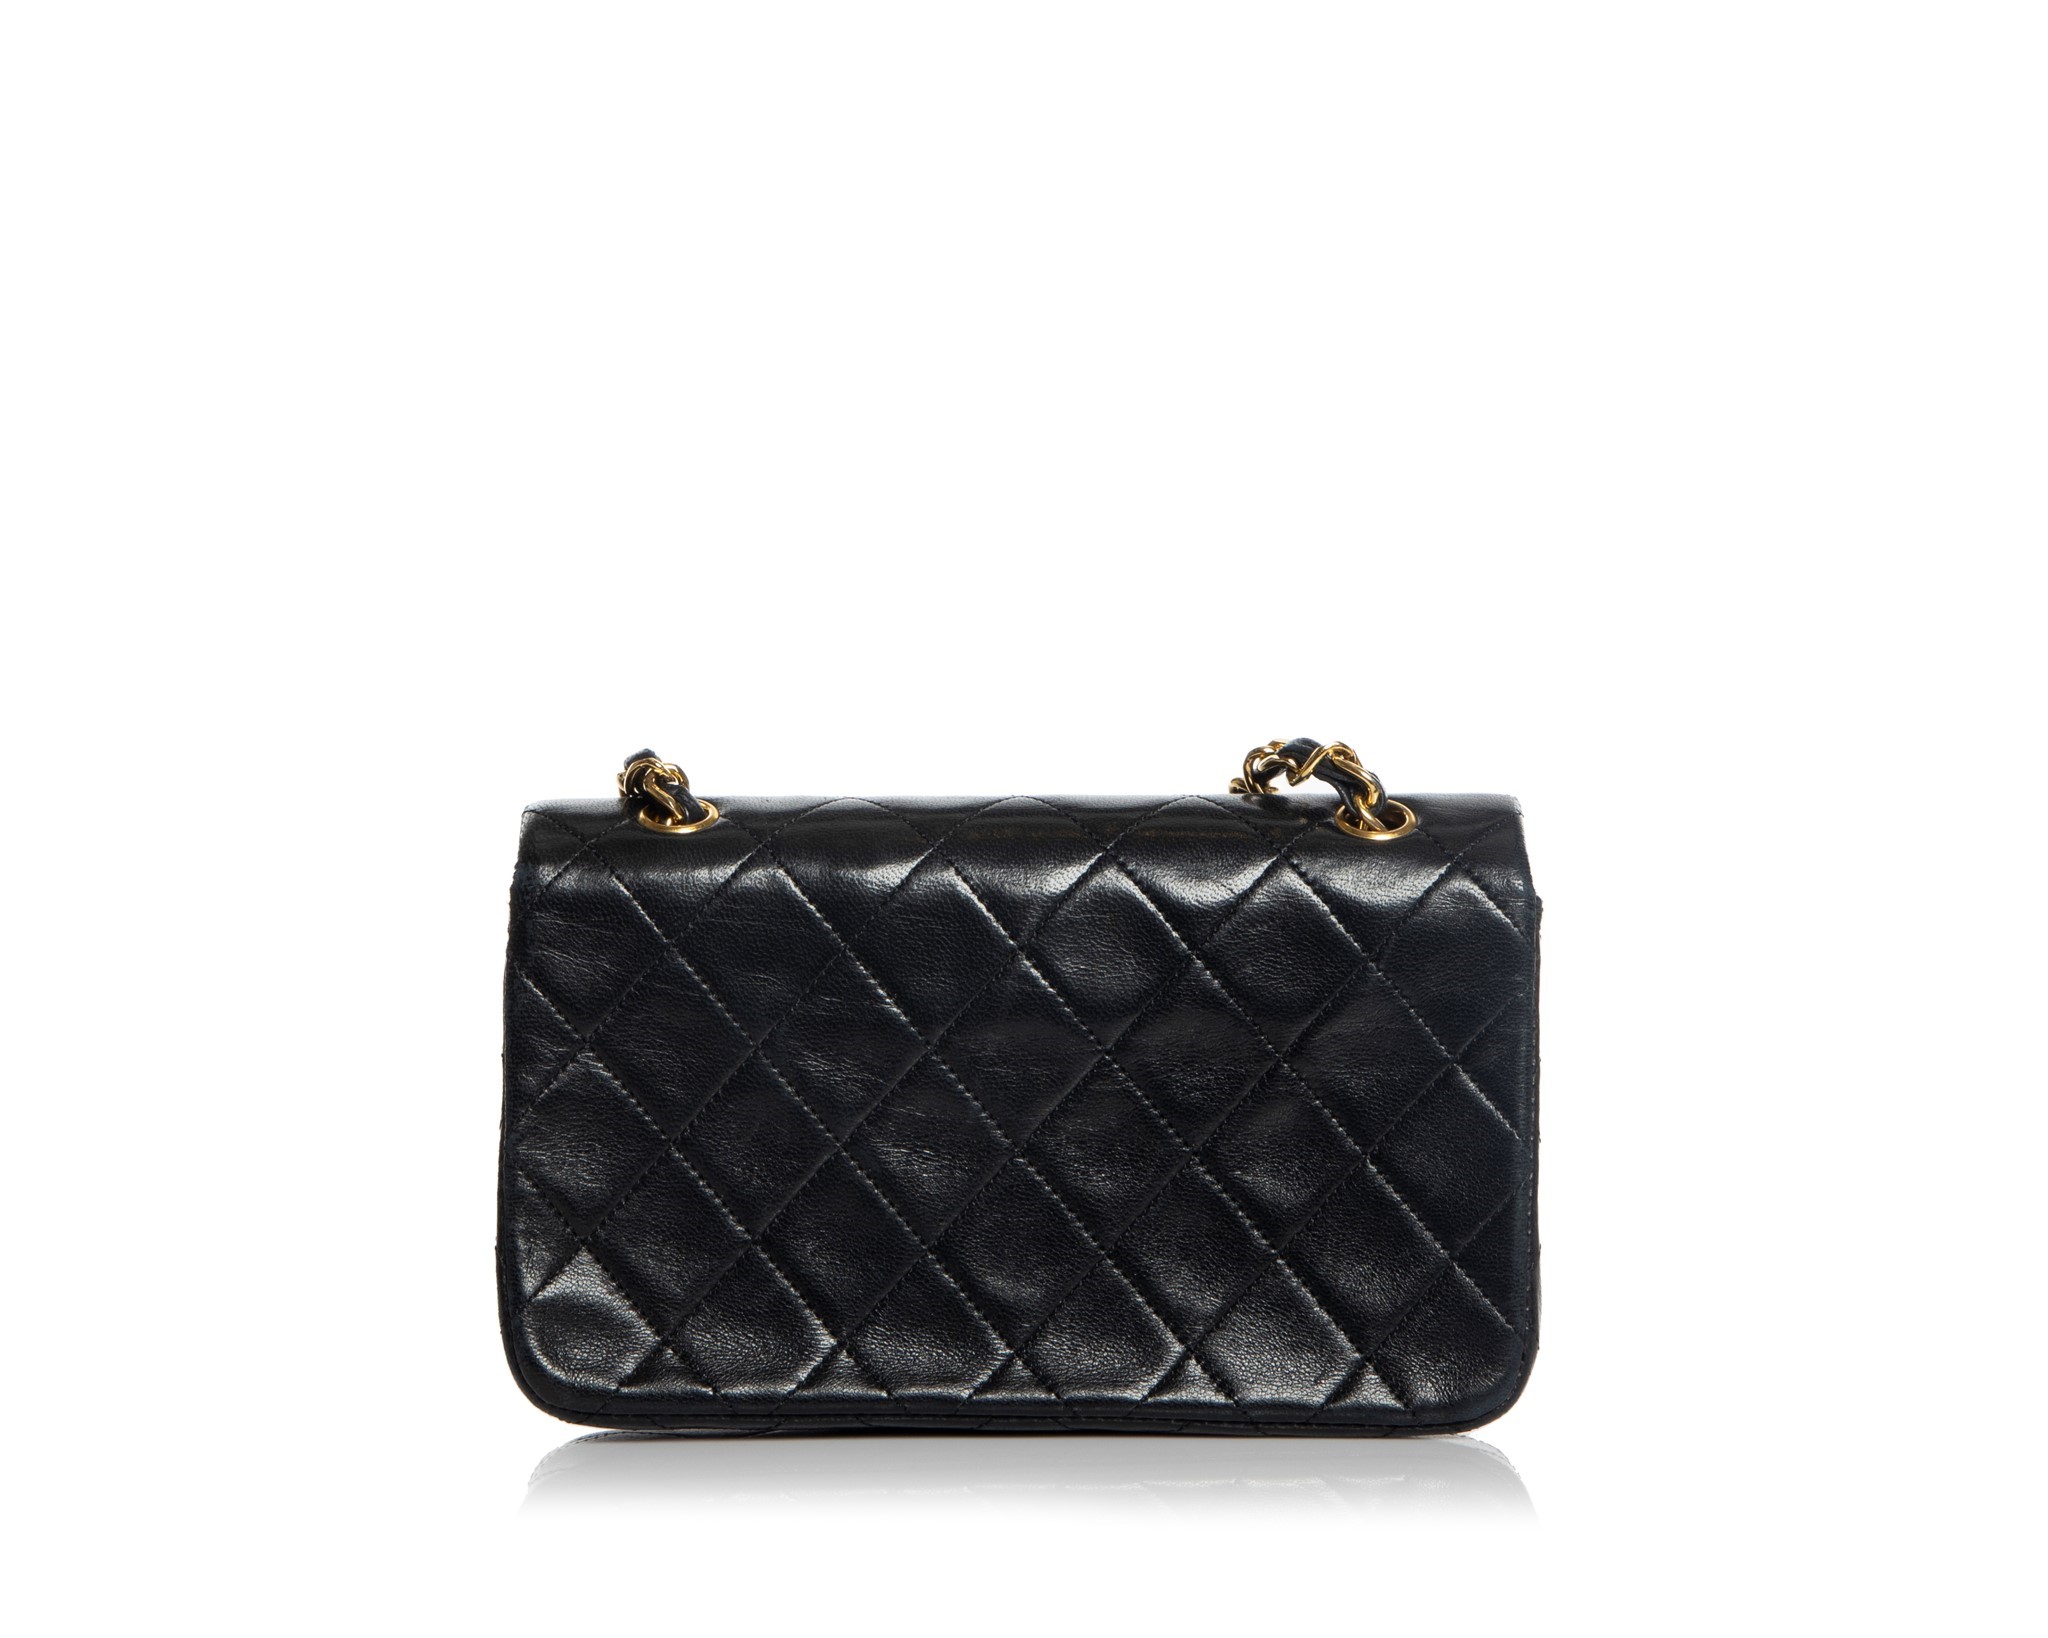 Chanel Vintage Chanel 7.5 Mini Black Quilted Leather Shoulder Flap